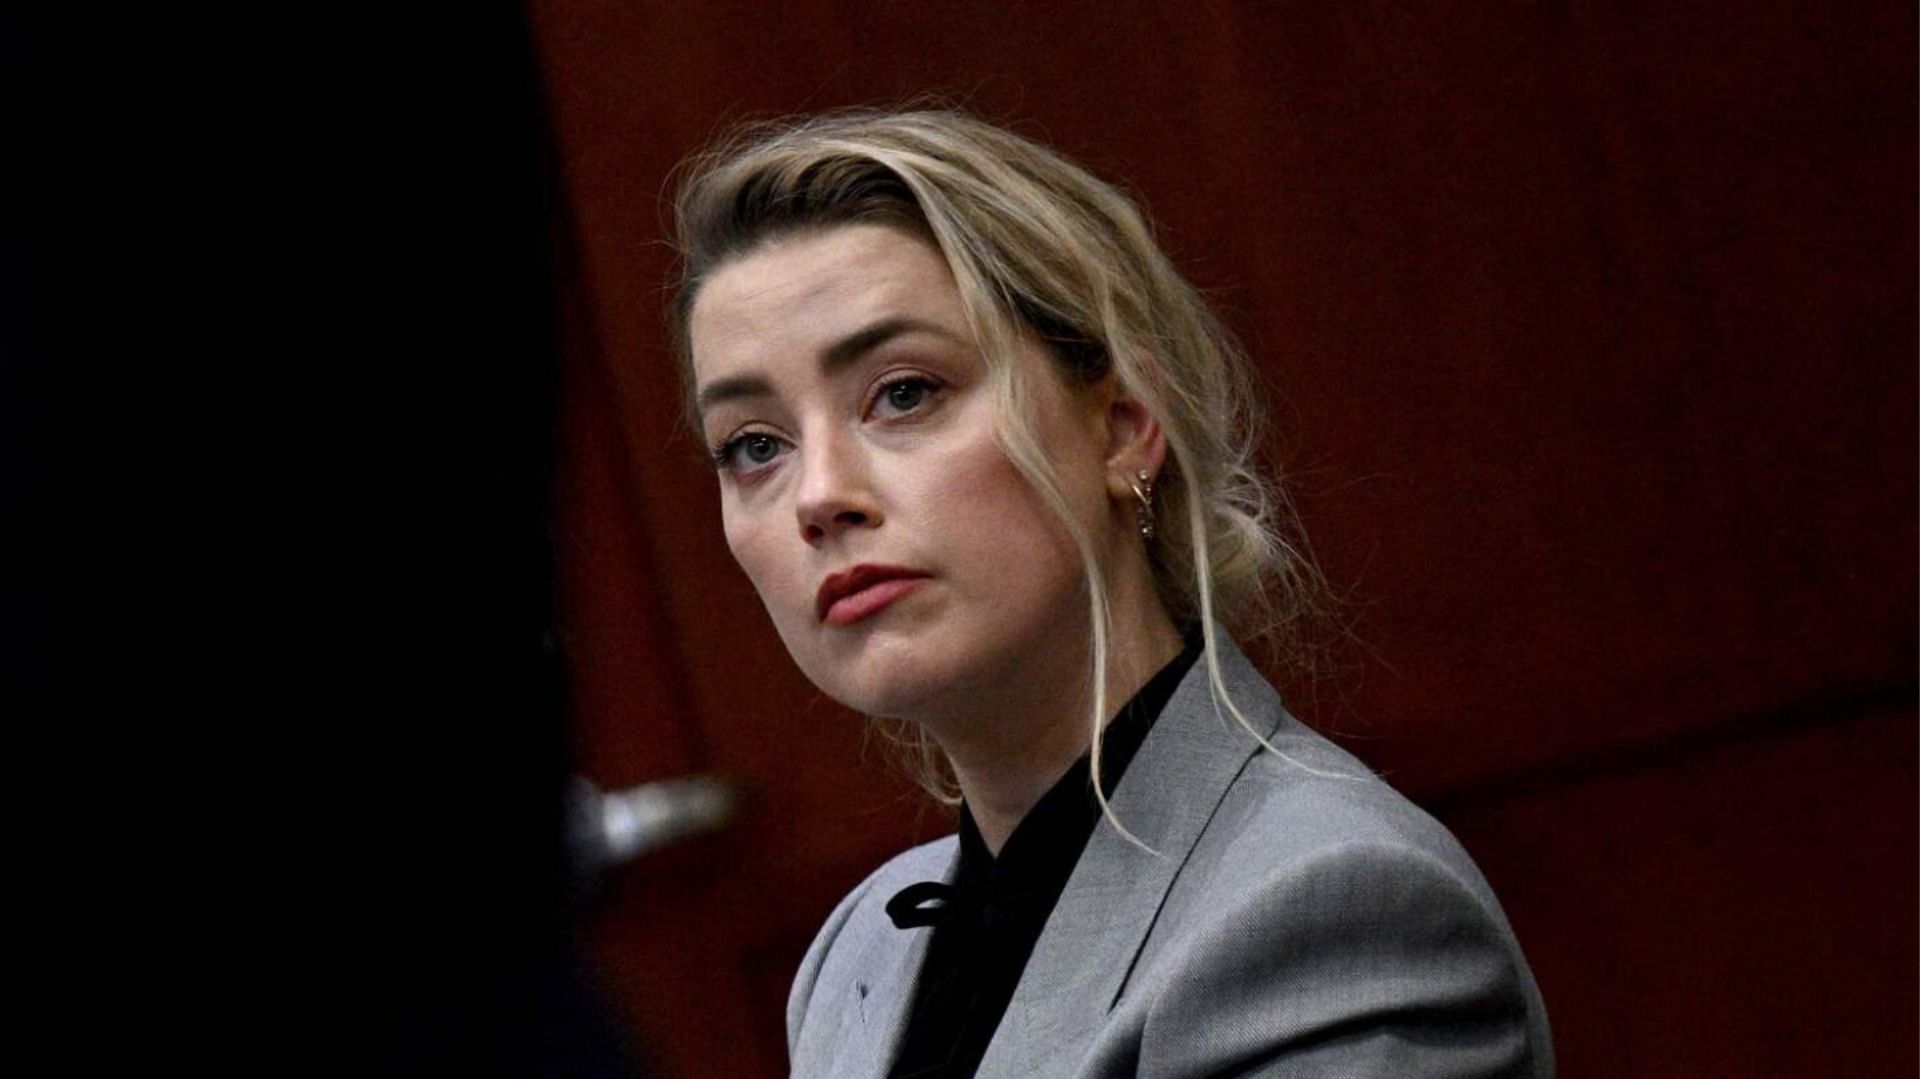 Amber Heard was provided with $2 million for a defamatory statement by Johnny Depp&#039;s former lawyer Adam Waldman. (Image via Getty Images/Brendan Smialowski)